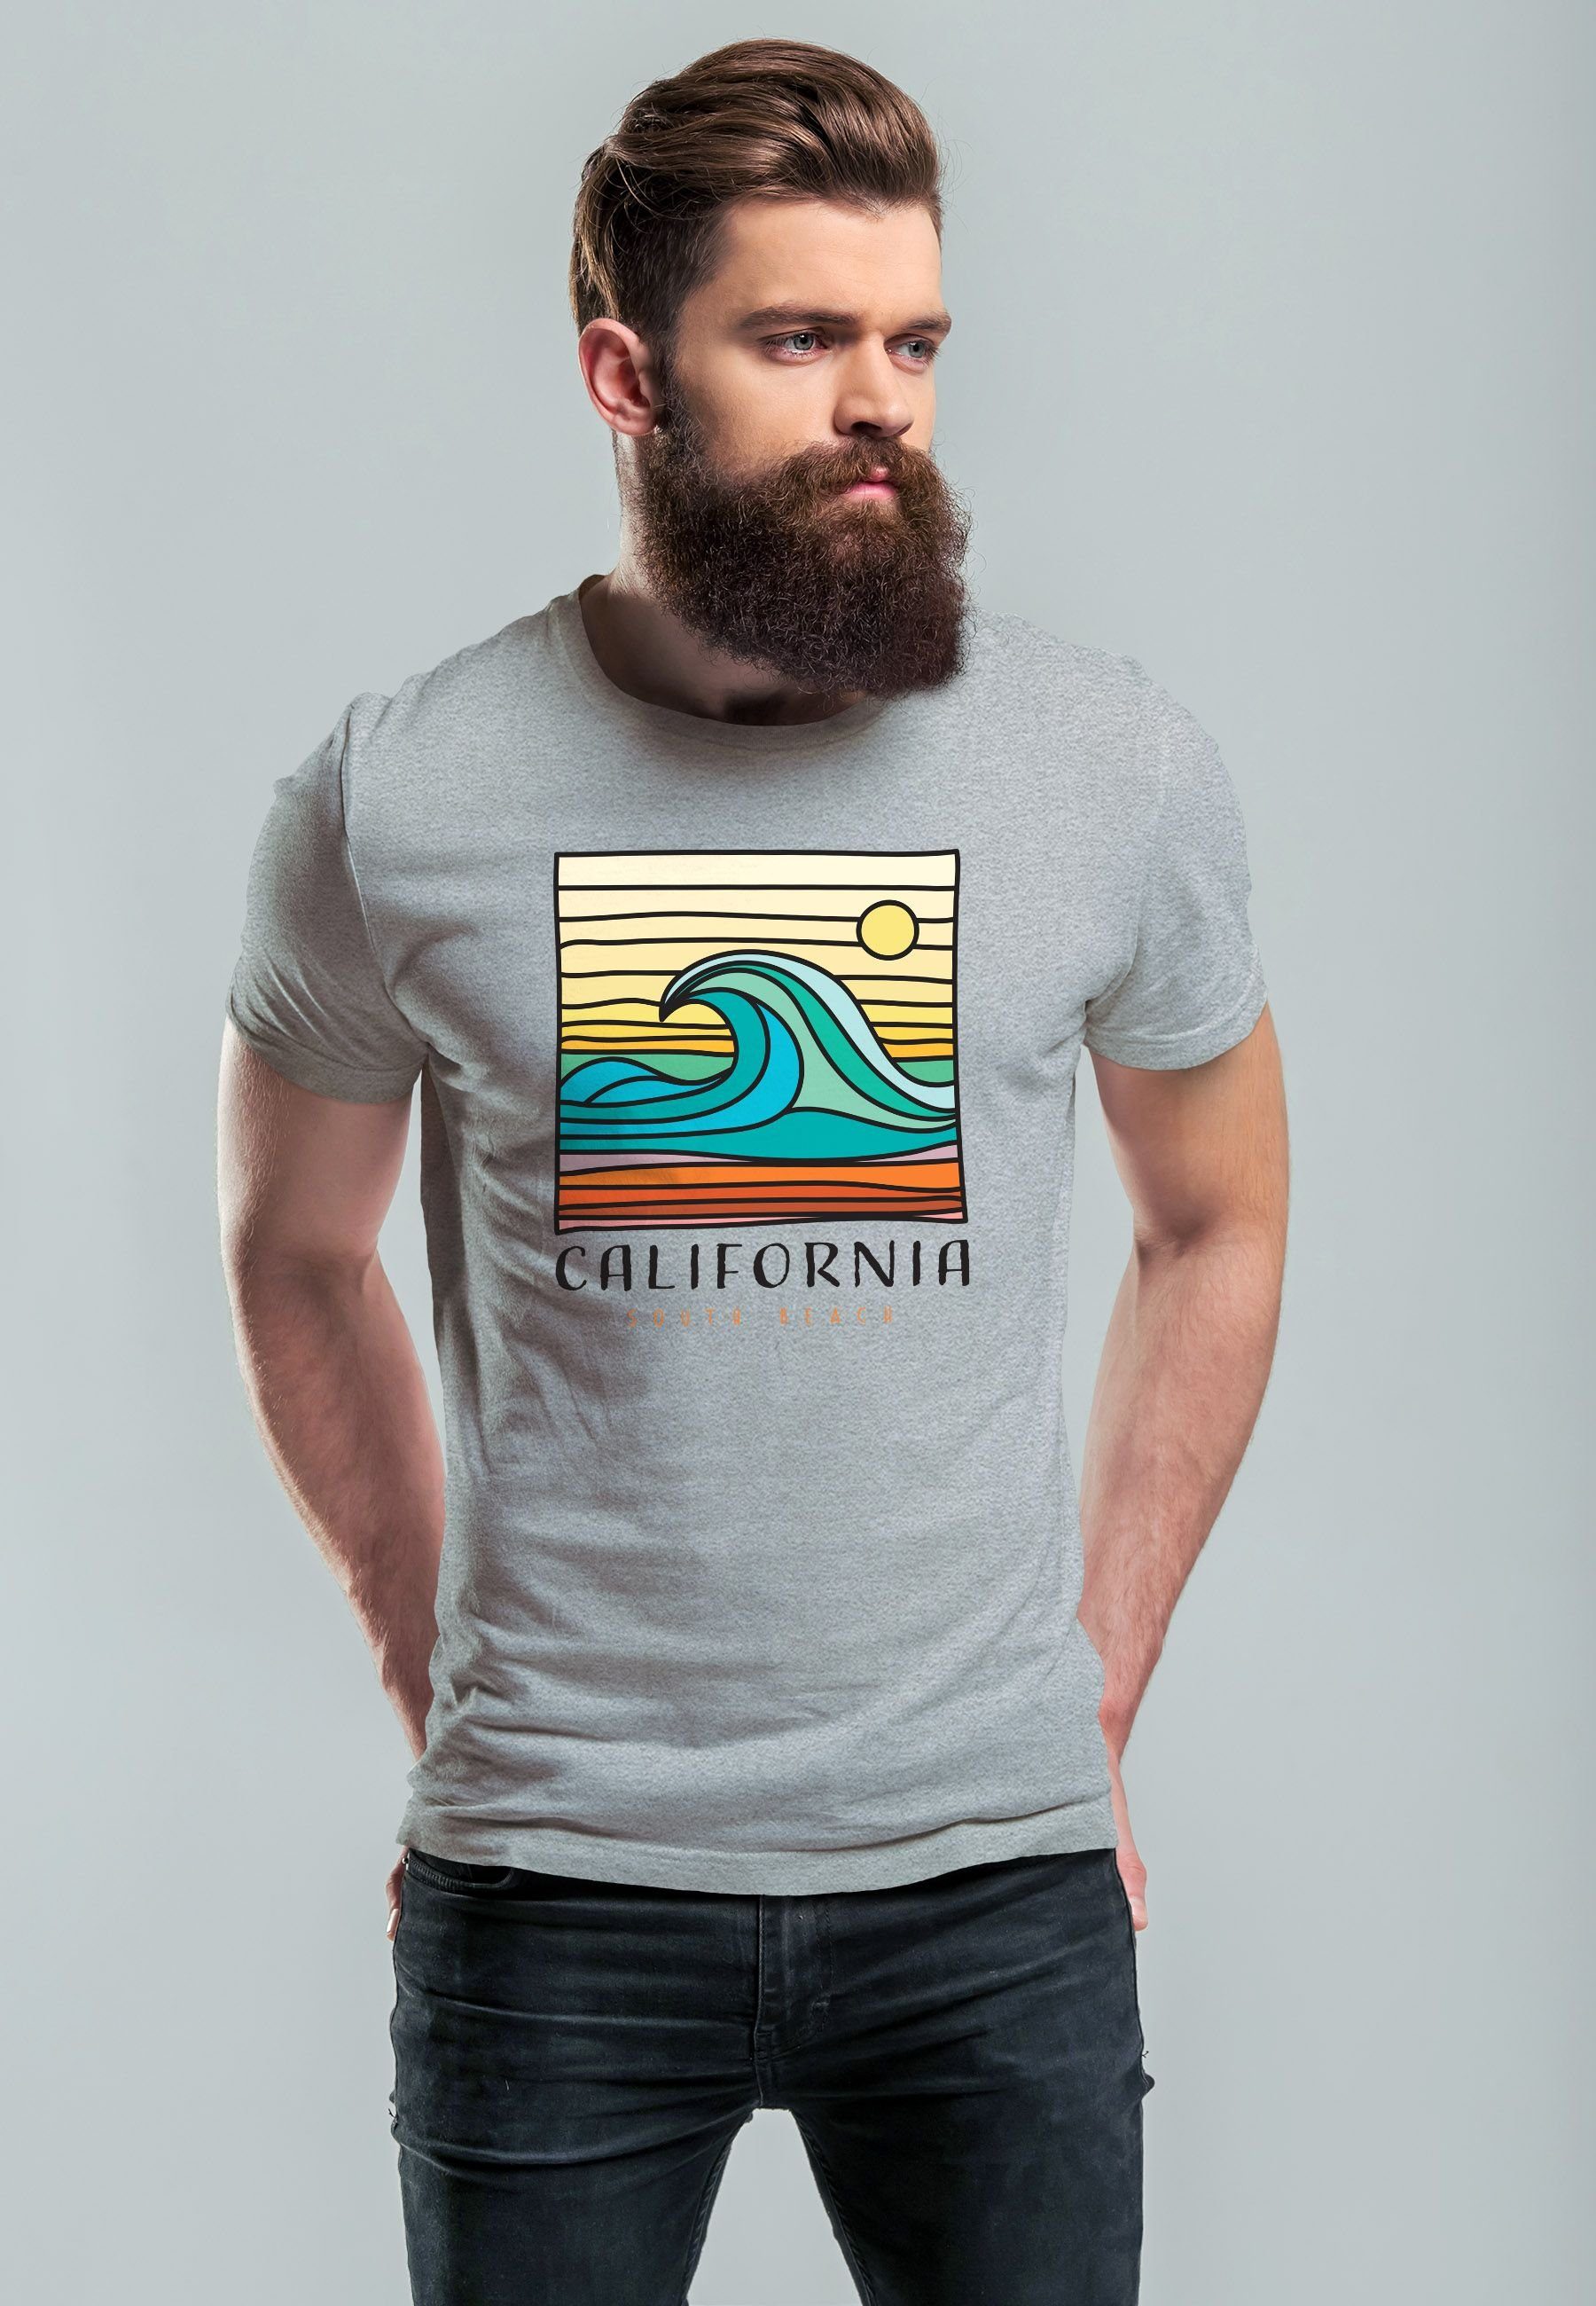 Aufdruc Print-Shirt Neverless mit Wave Herren grau Beach California Welle Surfing Print South Print T-Shirt